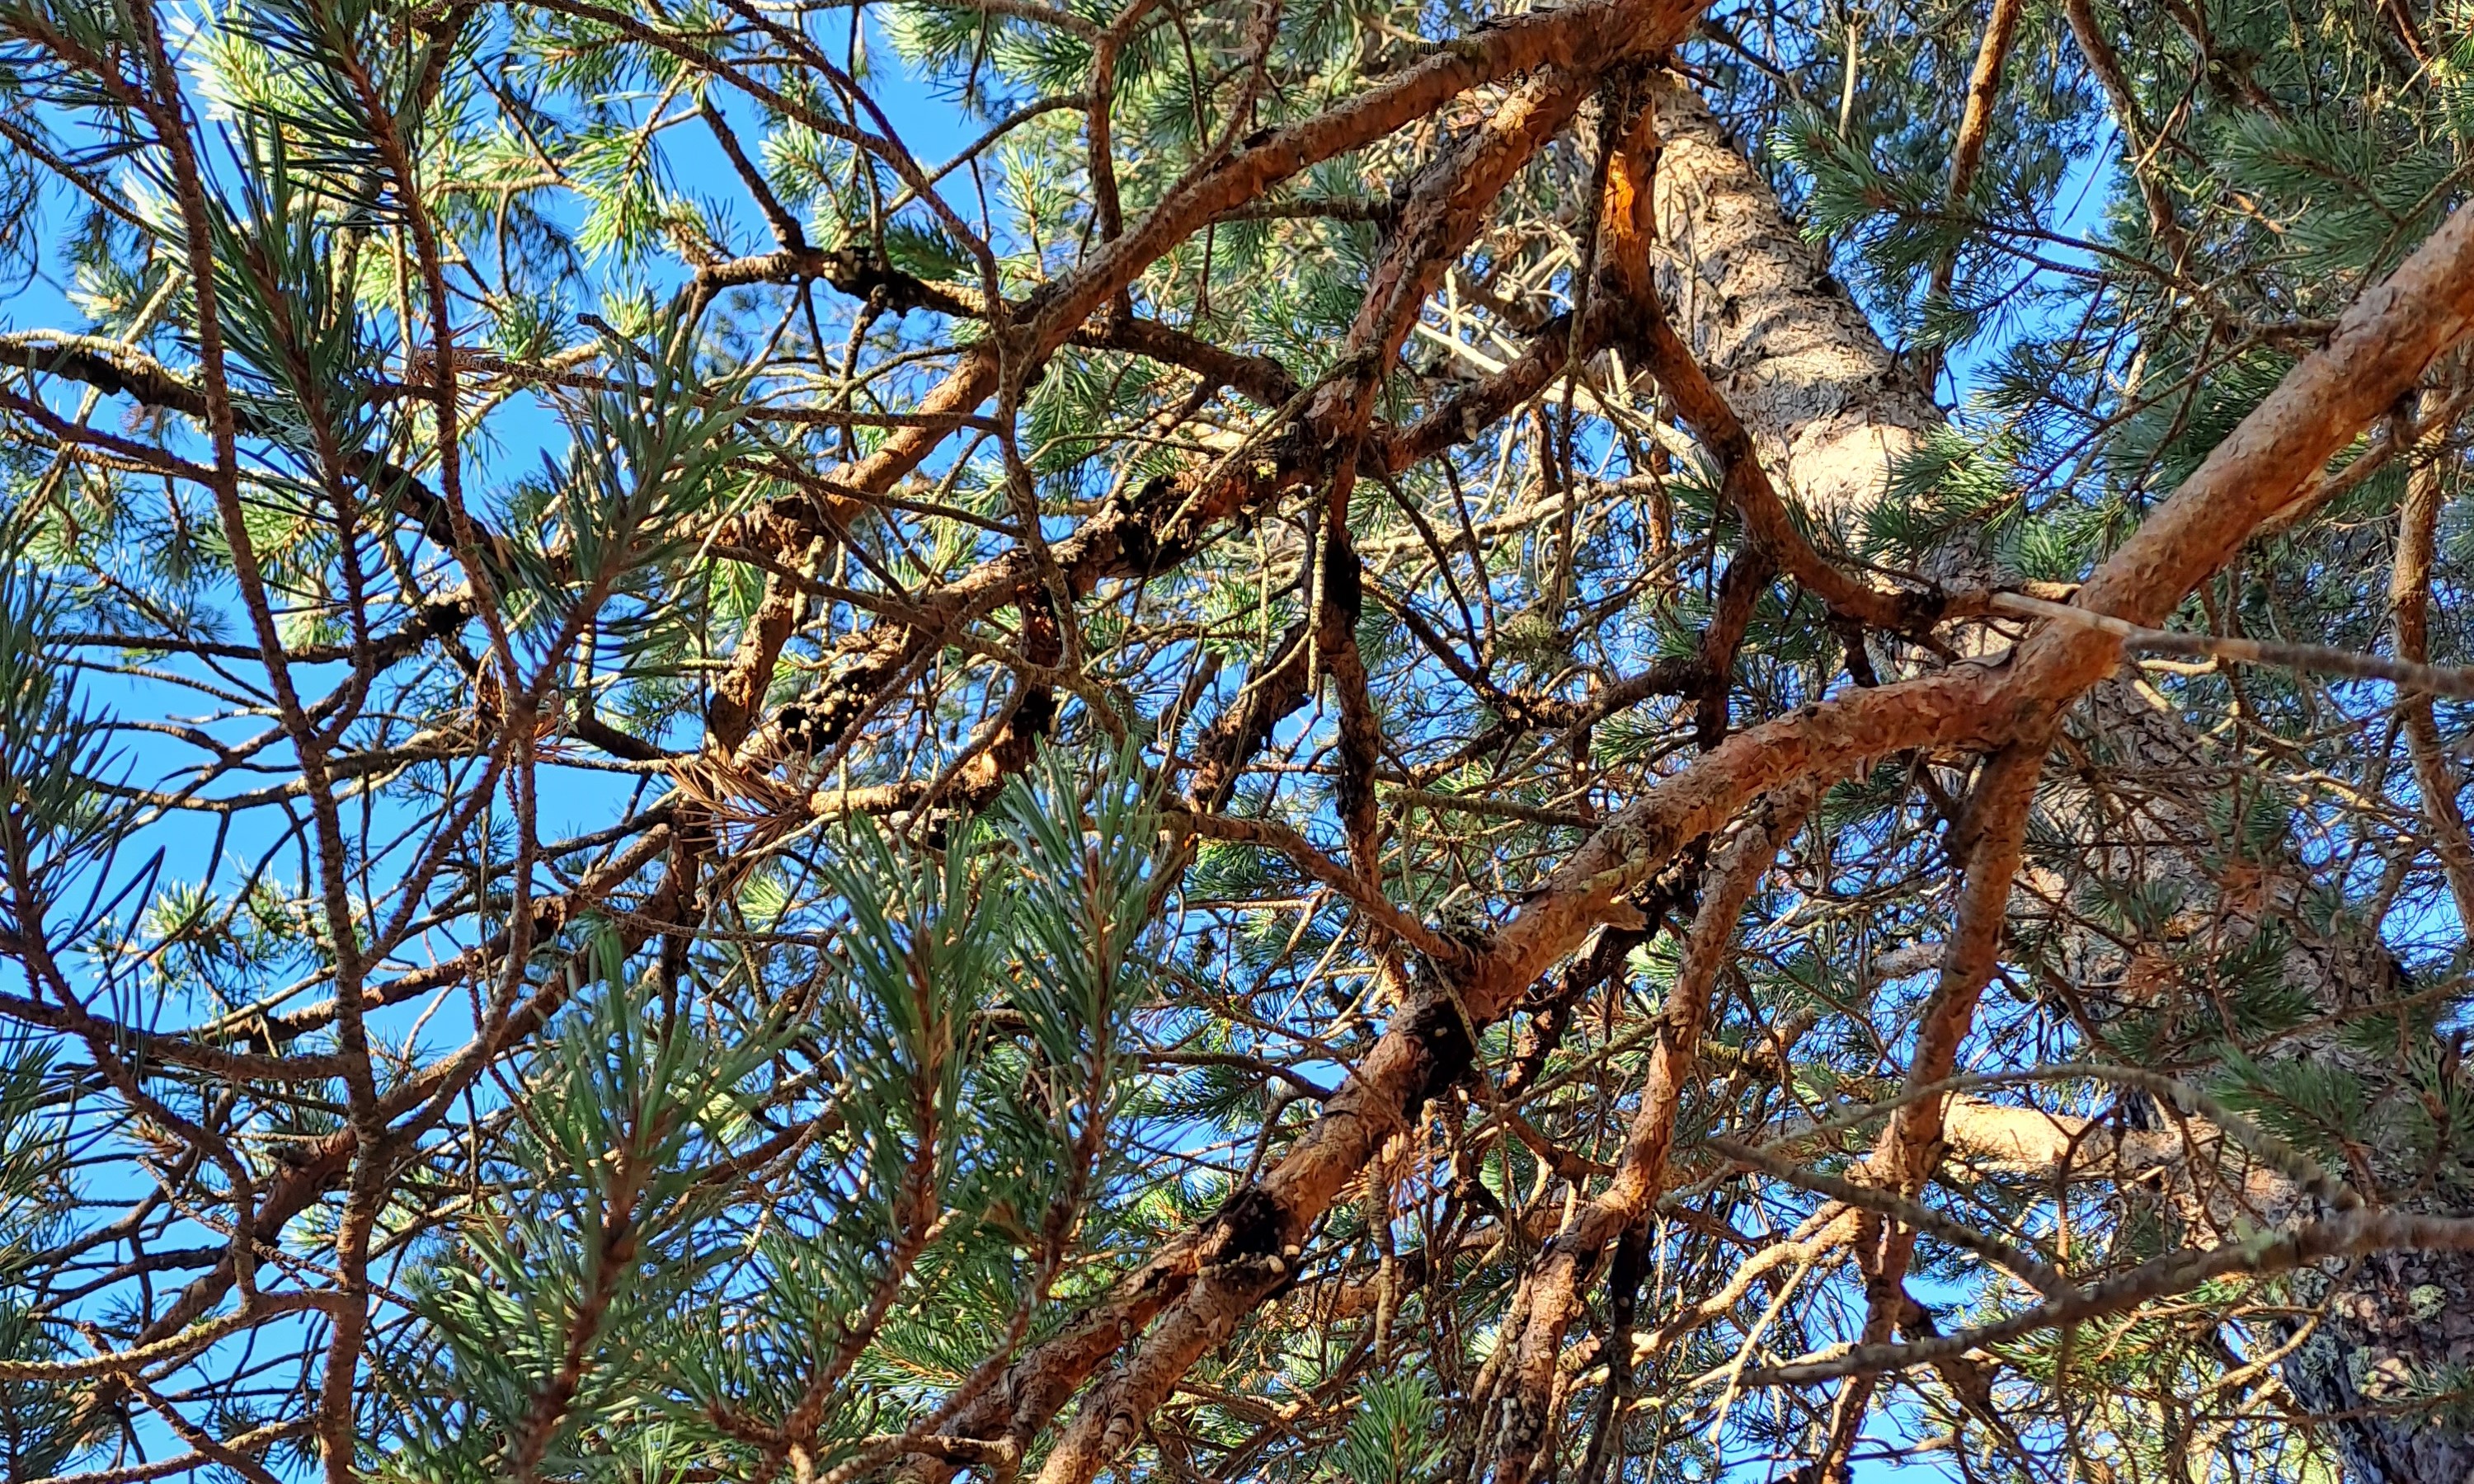 Curreya pithyophila on branches